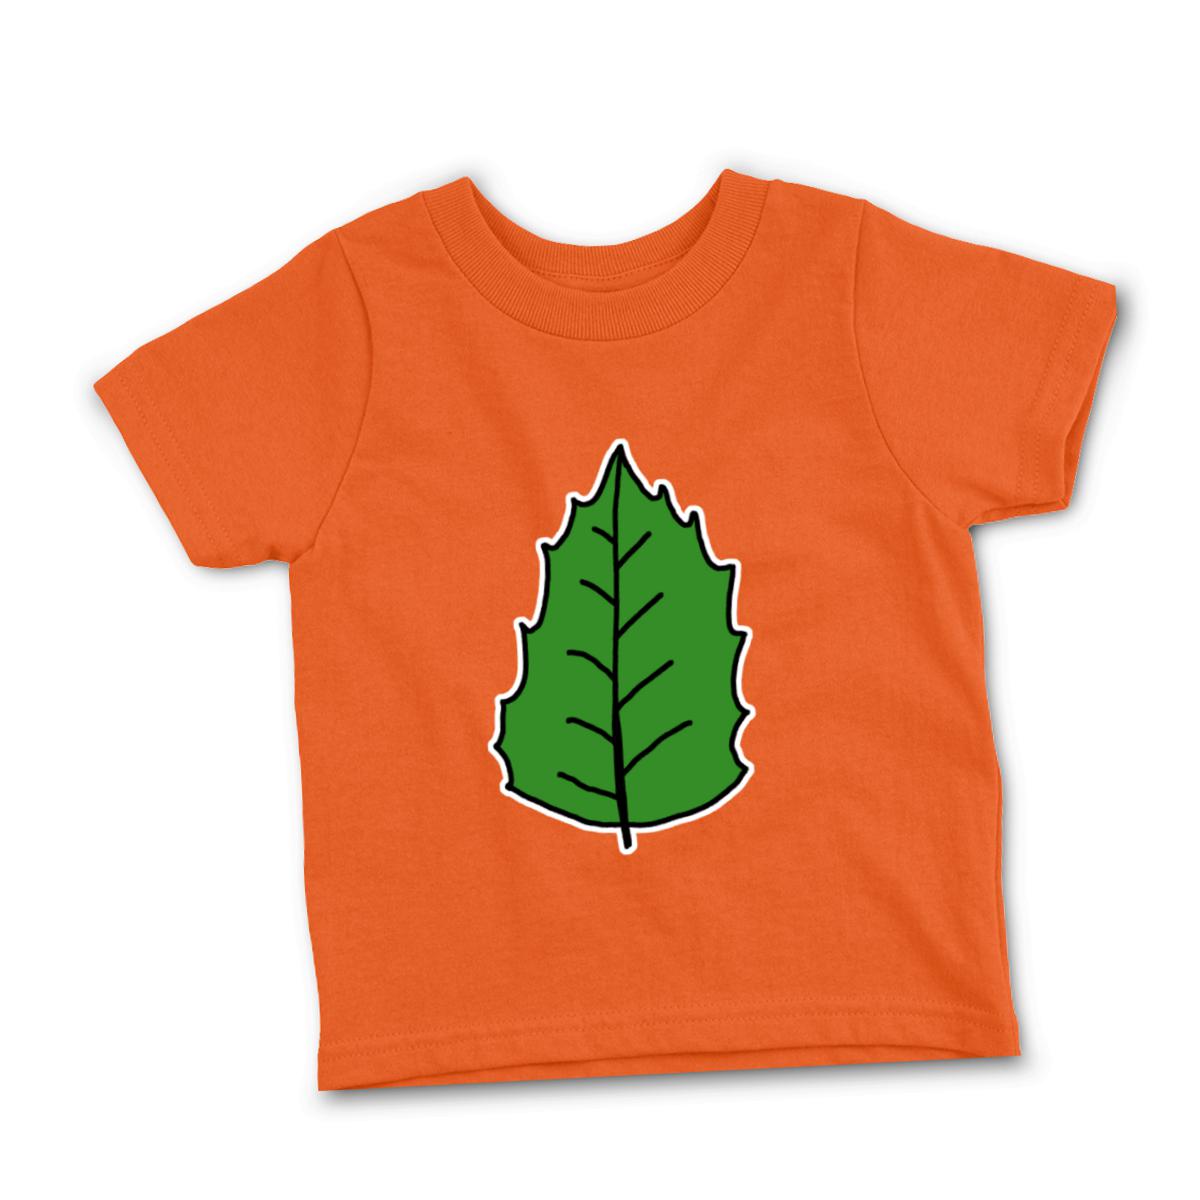 Holly Leaf Toddler Tee 56T orange